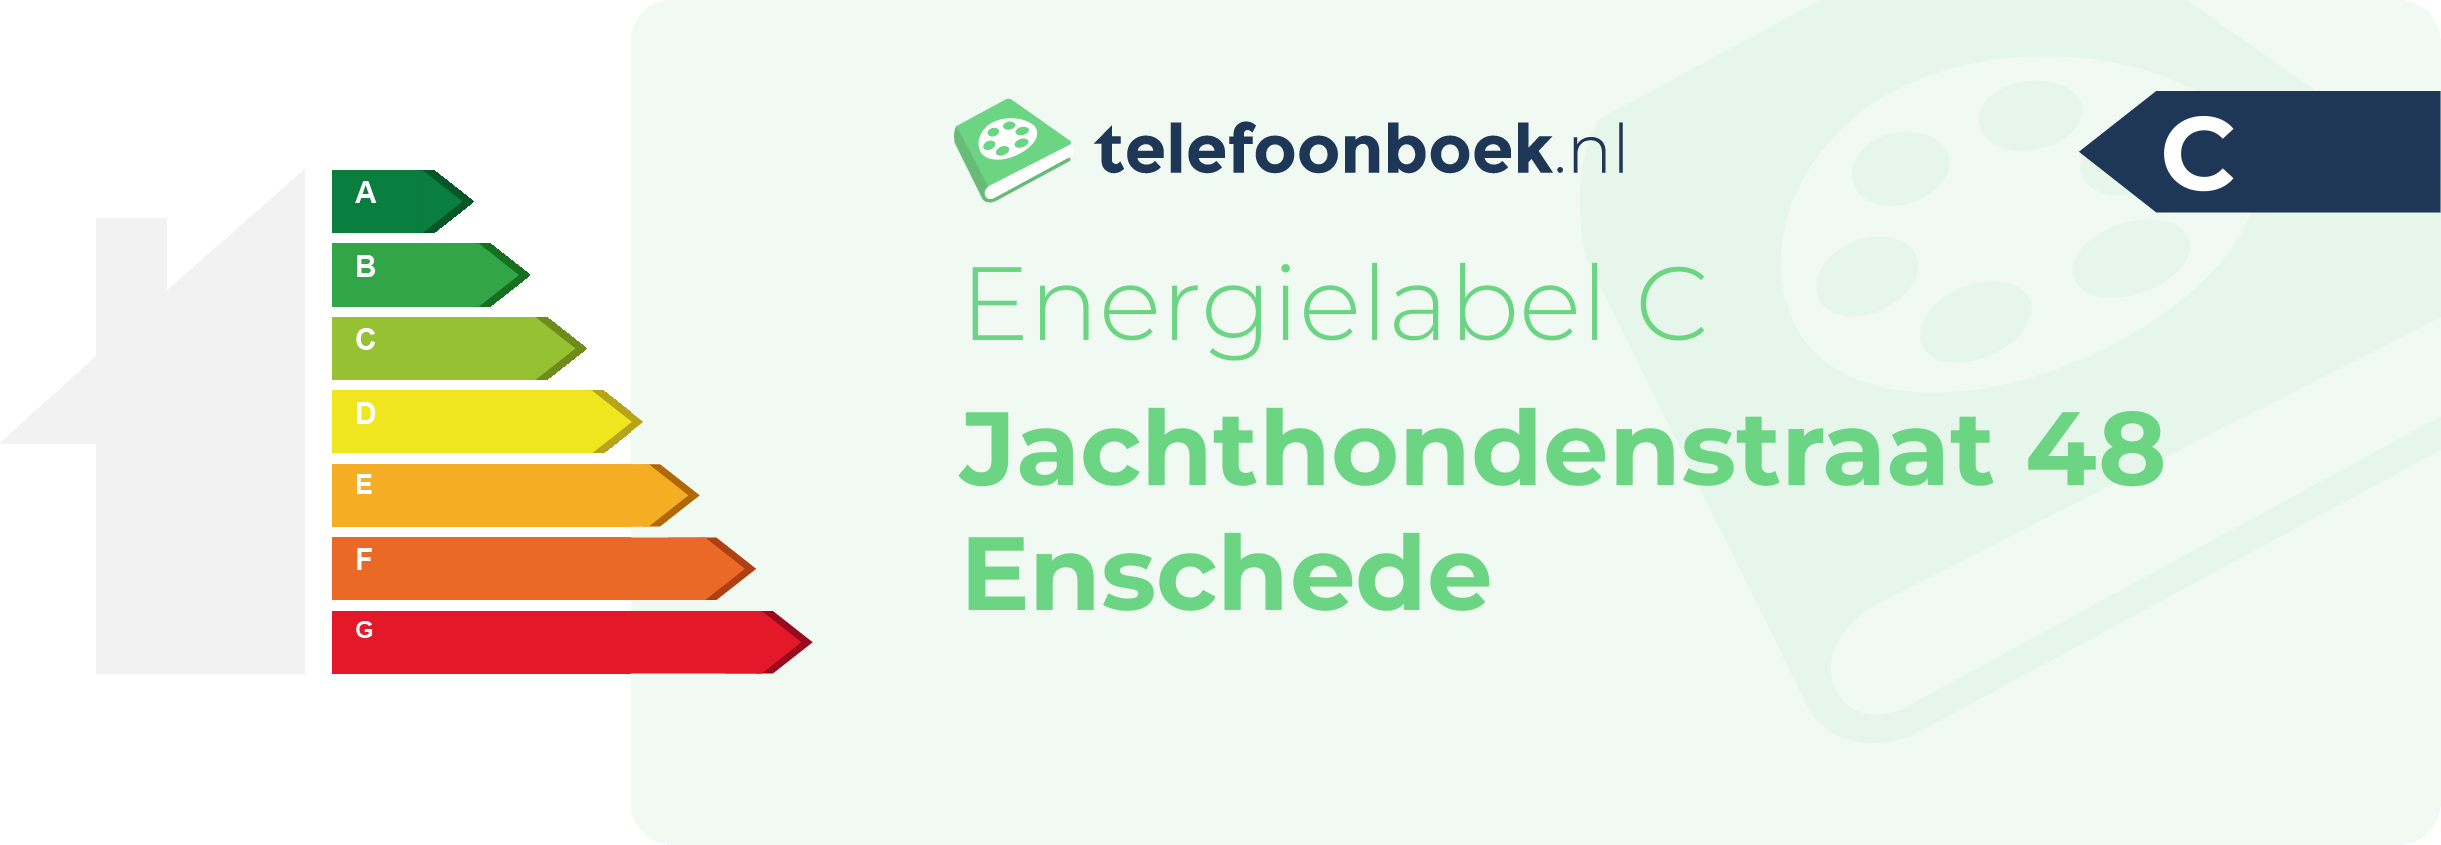 Energielabel Jachthondenstraat 48 Enschede